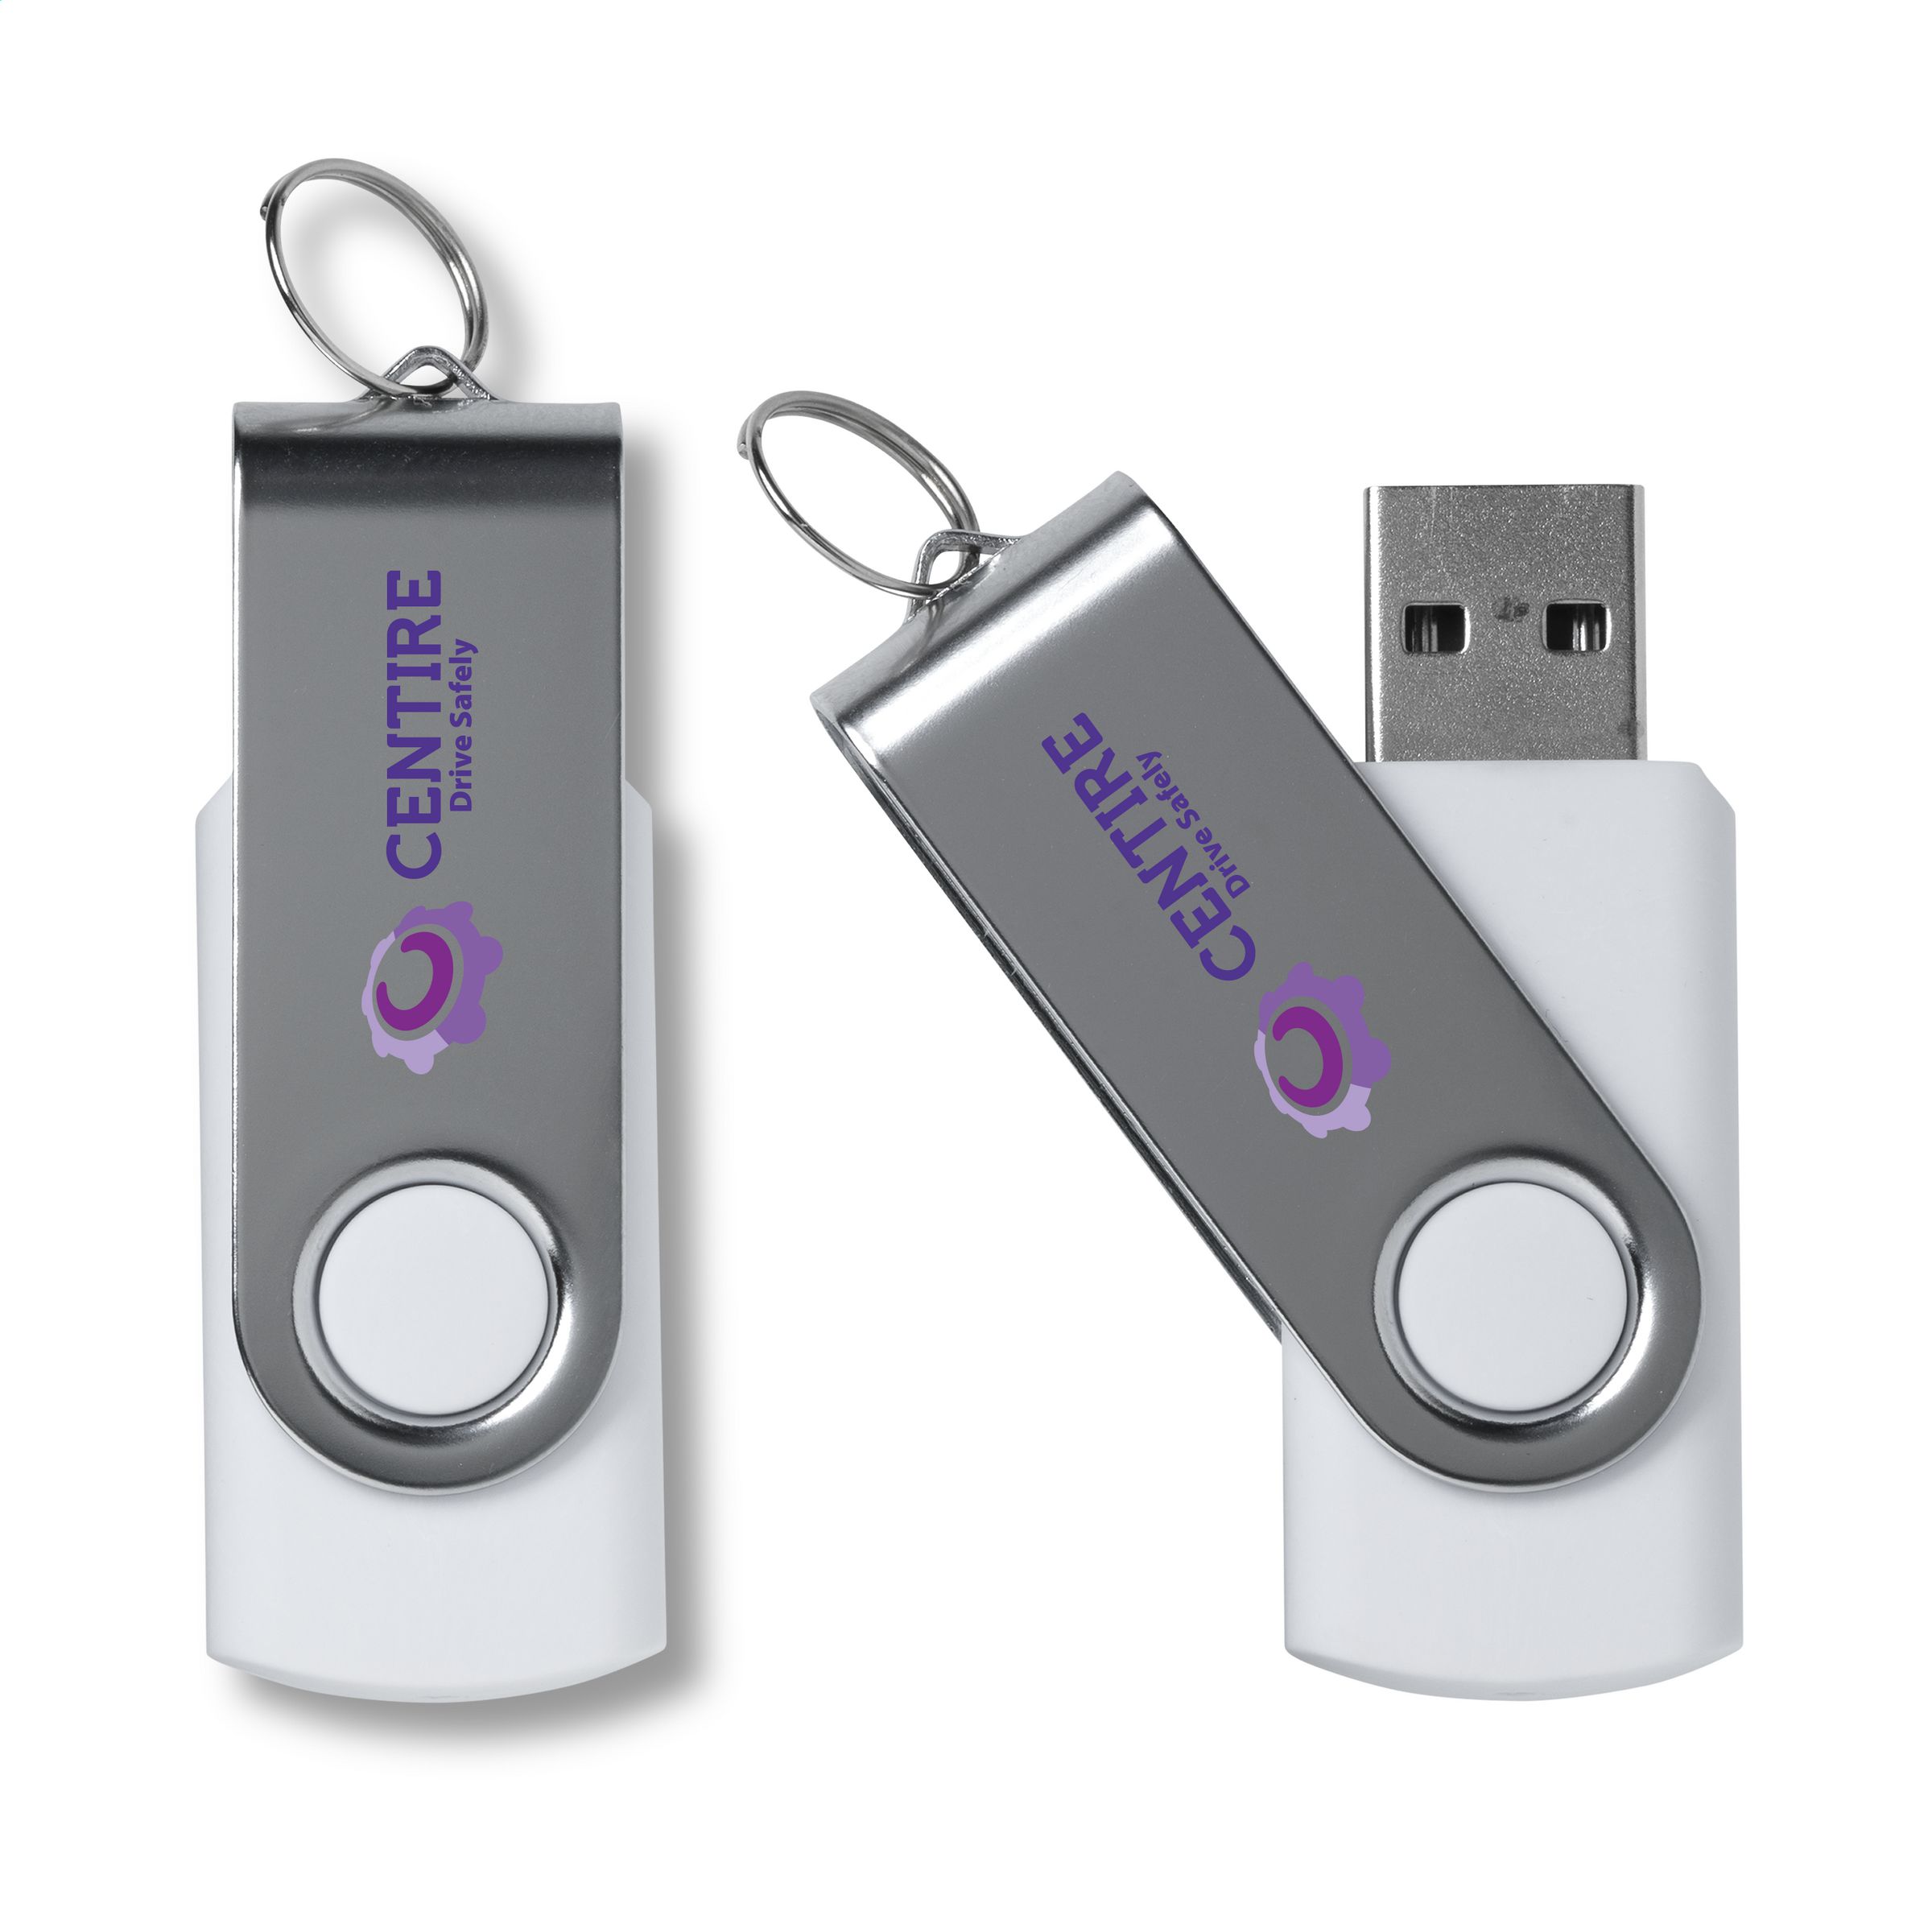 QuickData USB - Chestfield - Yalding